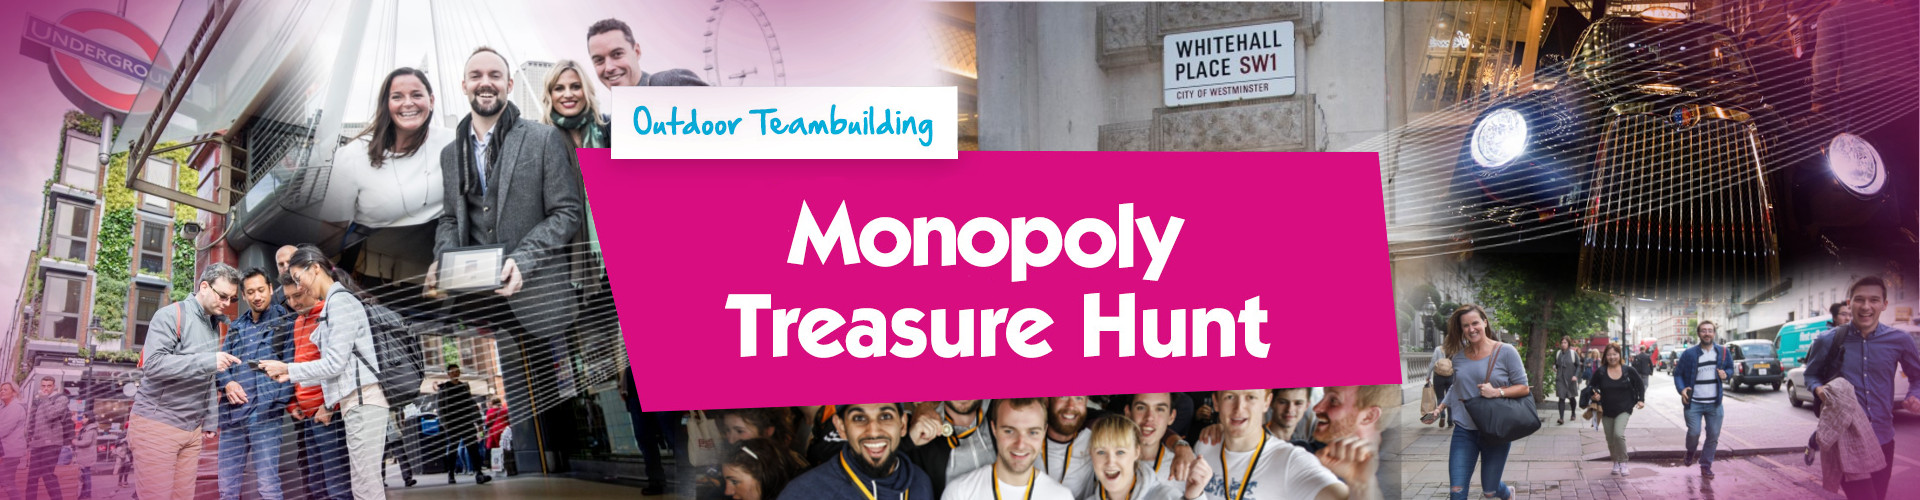 Monopoly Treasure Hunt Banner